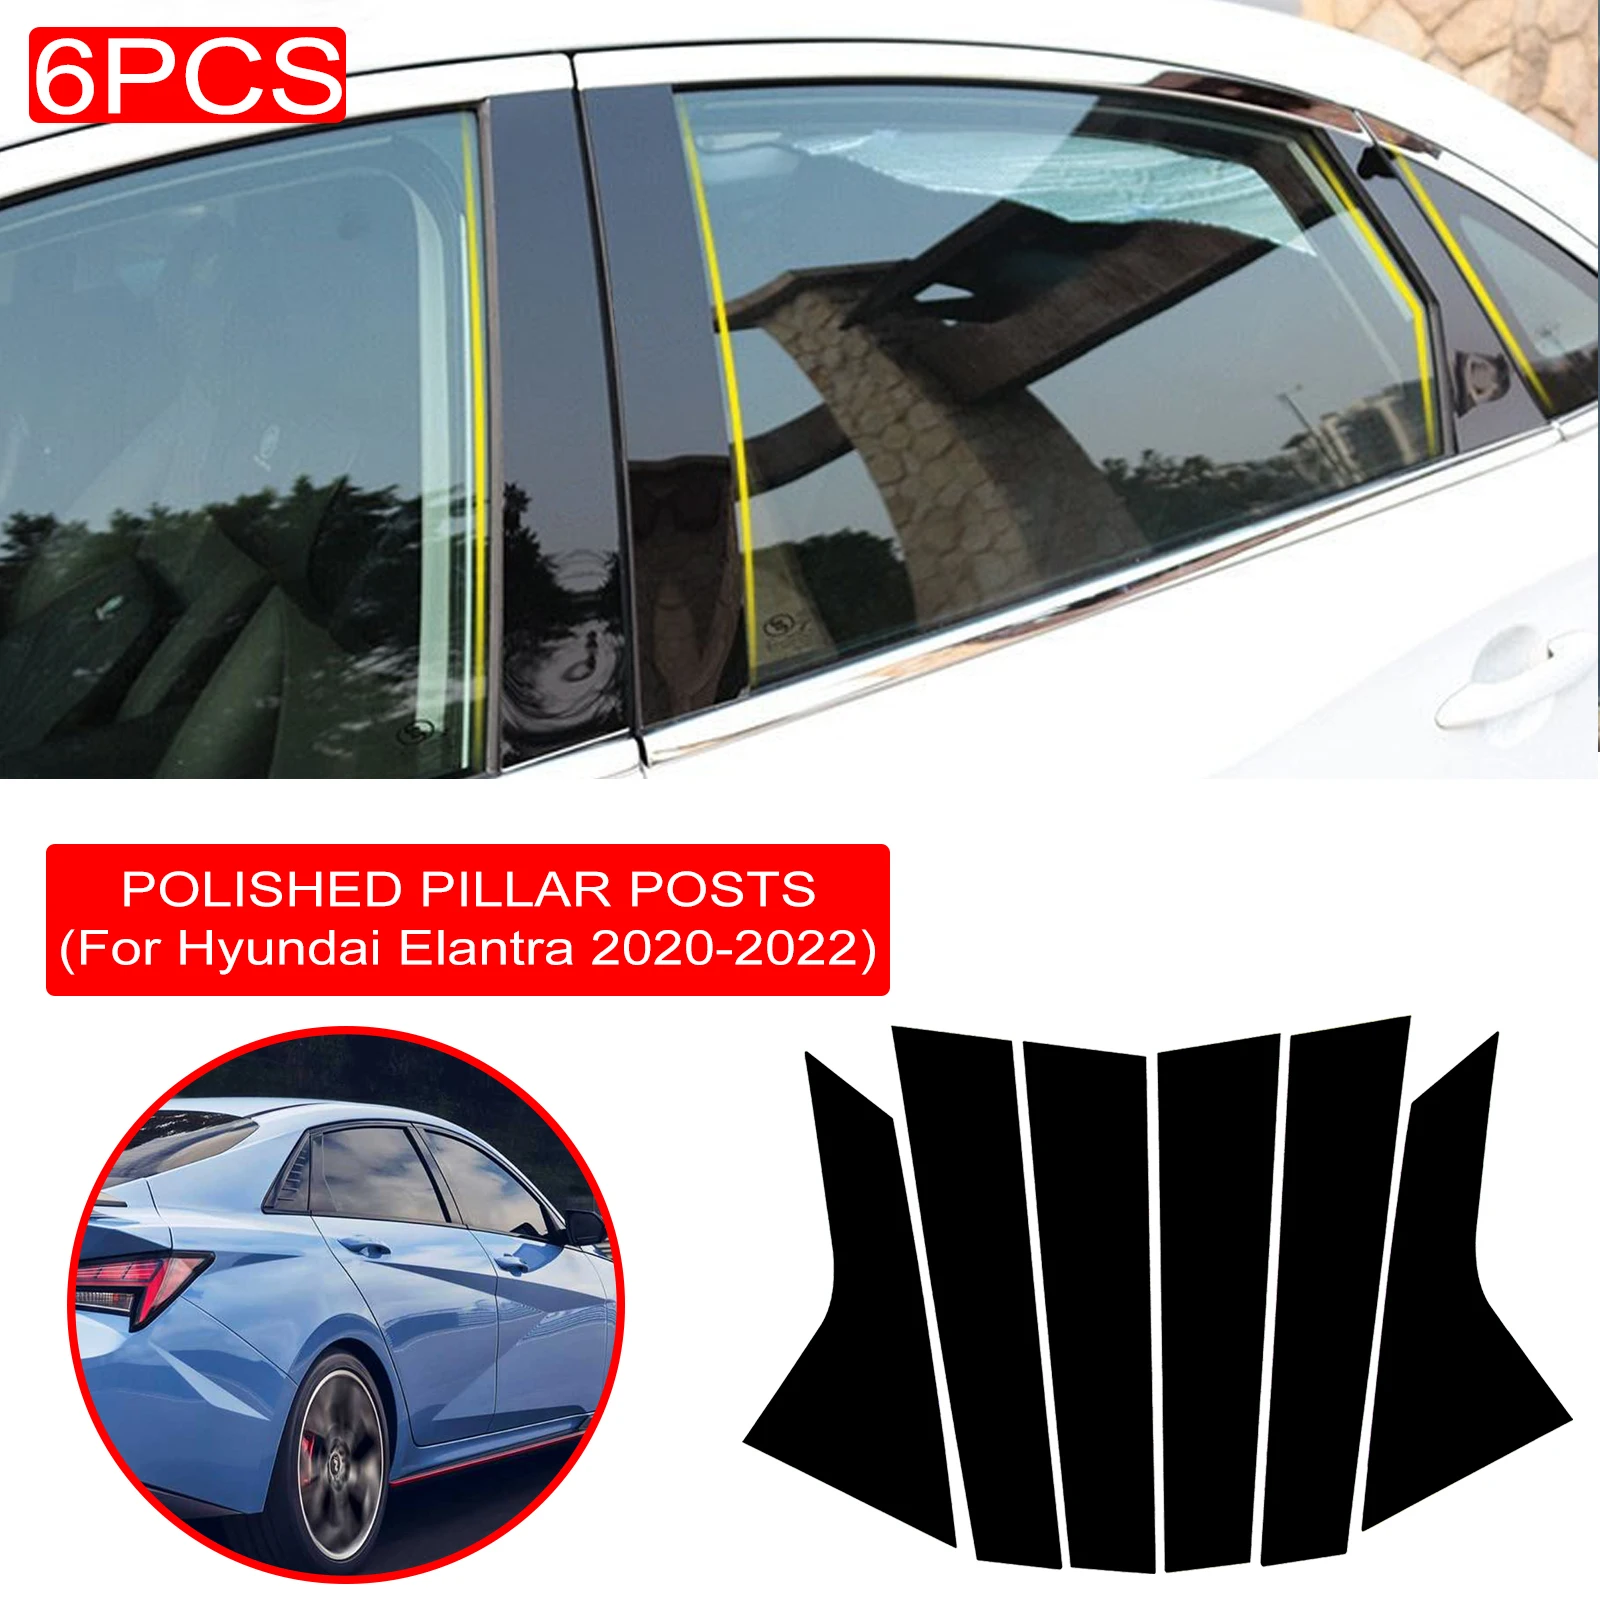 

6PCS Polished Pillar Posts For Hyundai Elantra 2020 2021 2022 Car Window Trim Cover BC Column Sticker Car Accessories